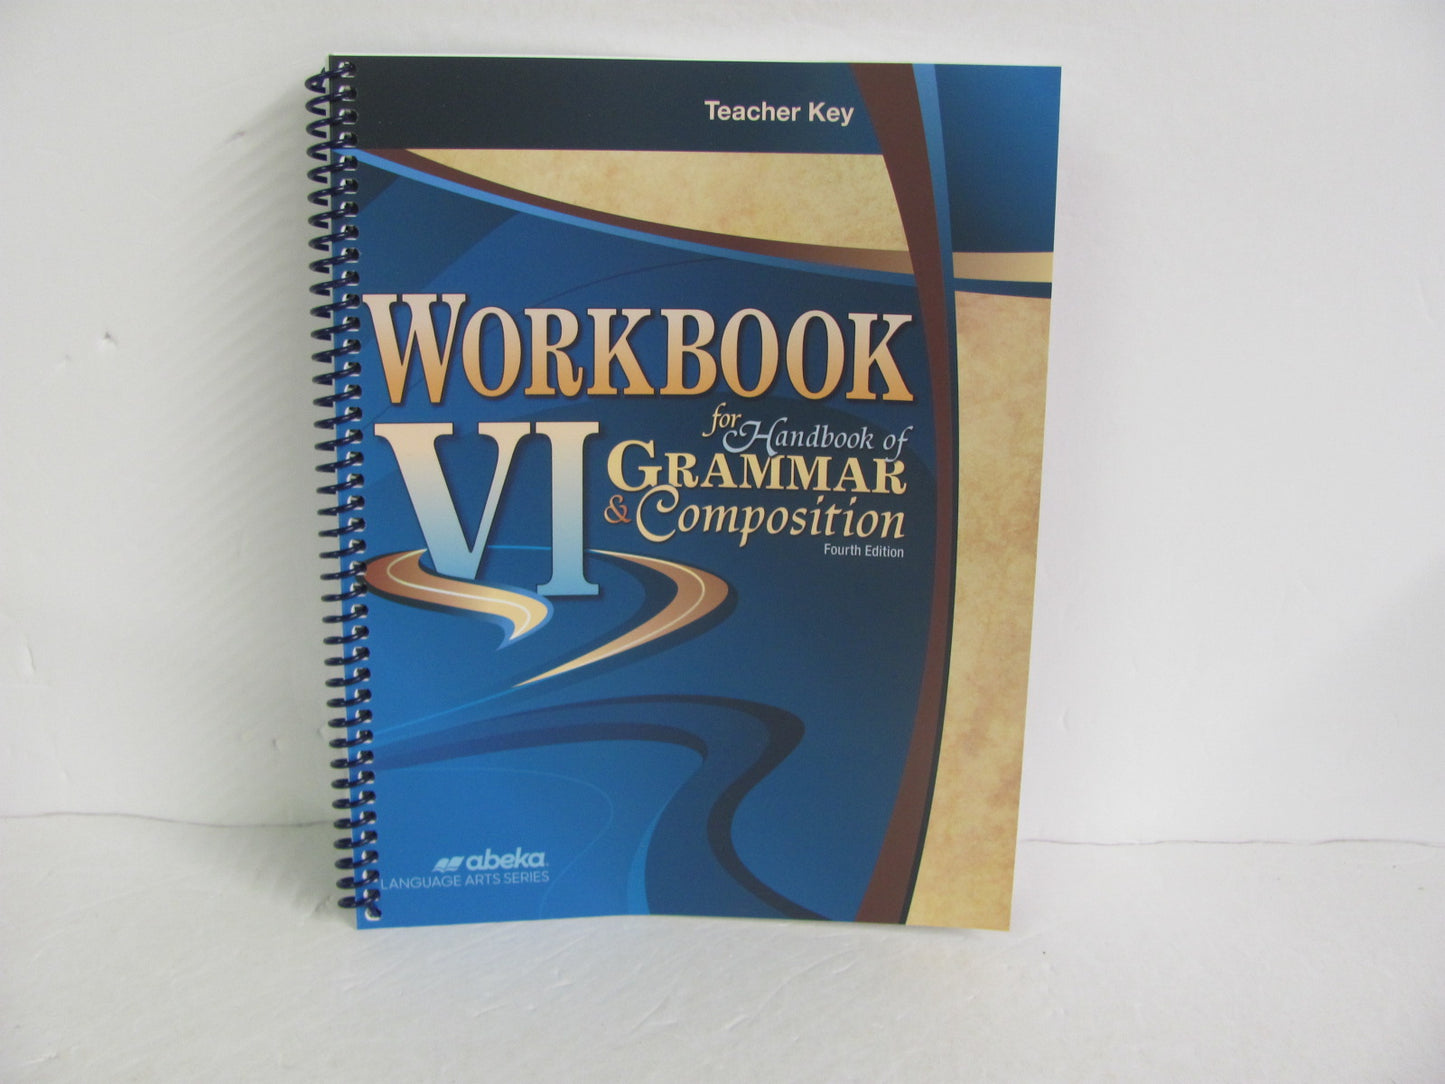 Workbook VI Abeka Teacher Key  Pre-Owned 12th Grade Language Textbooks